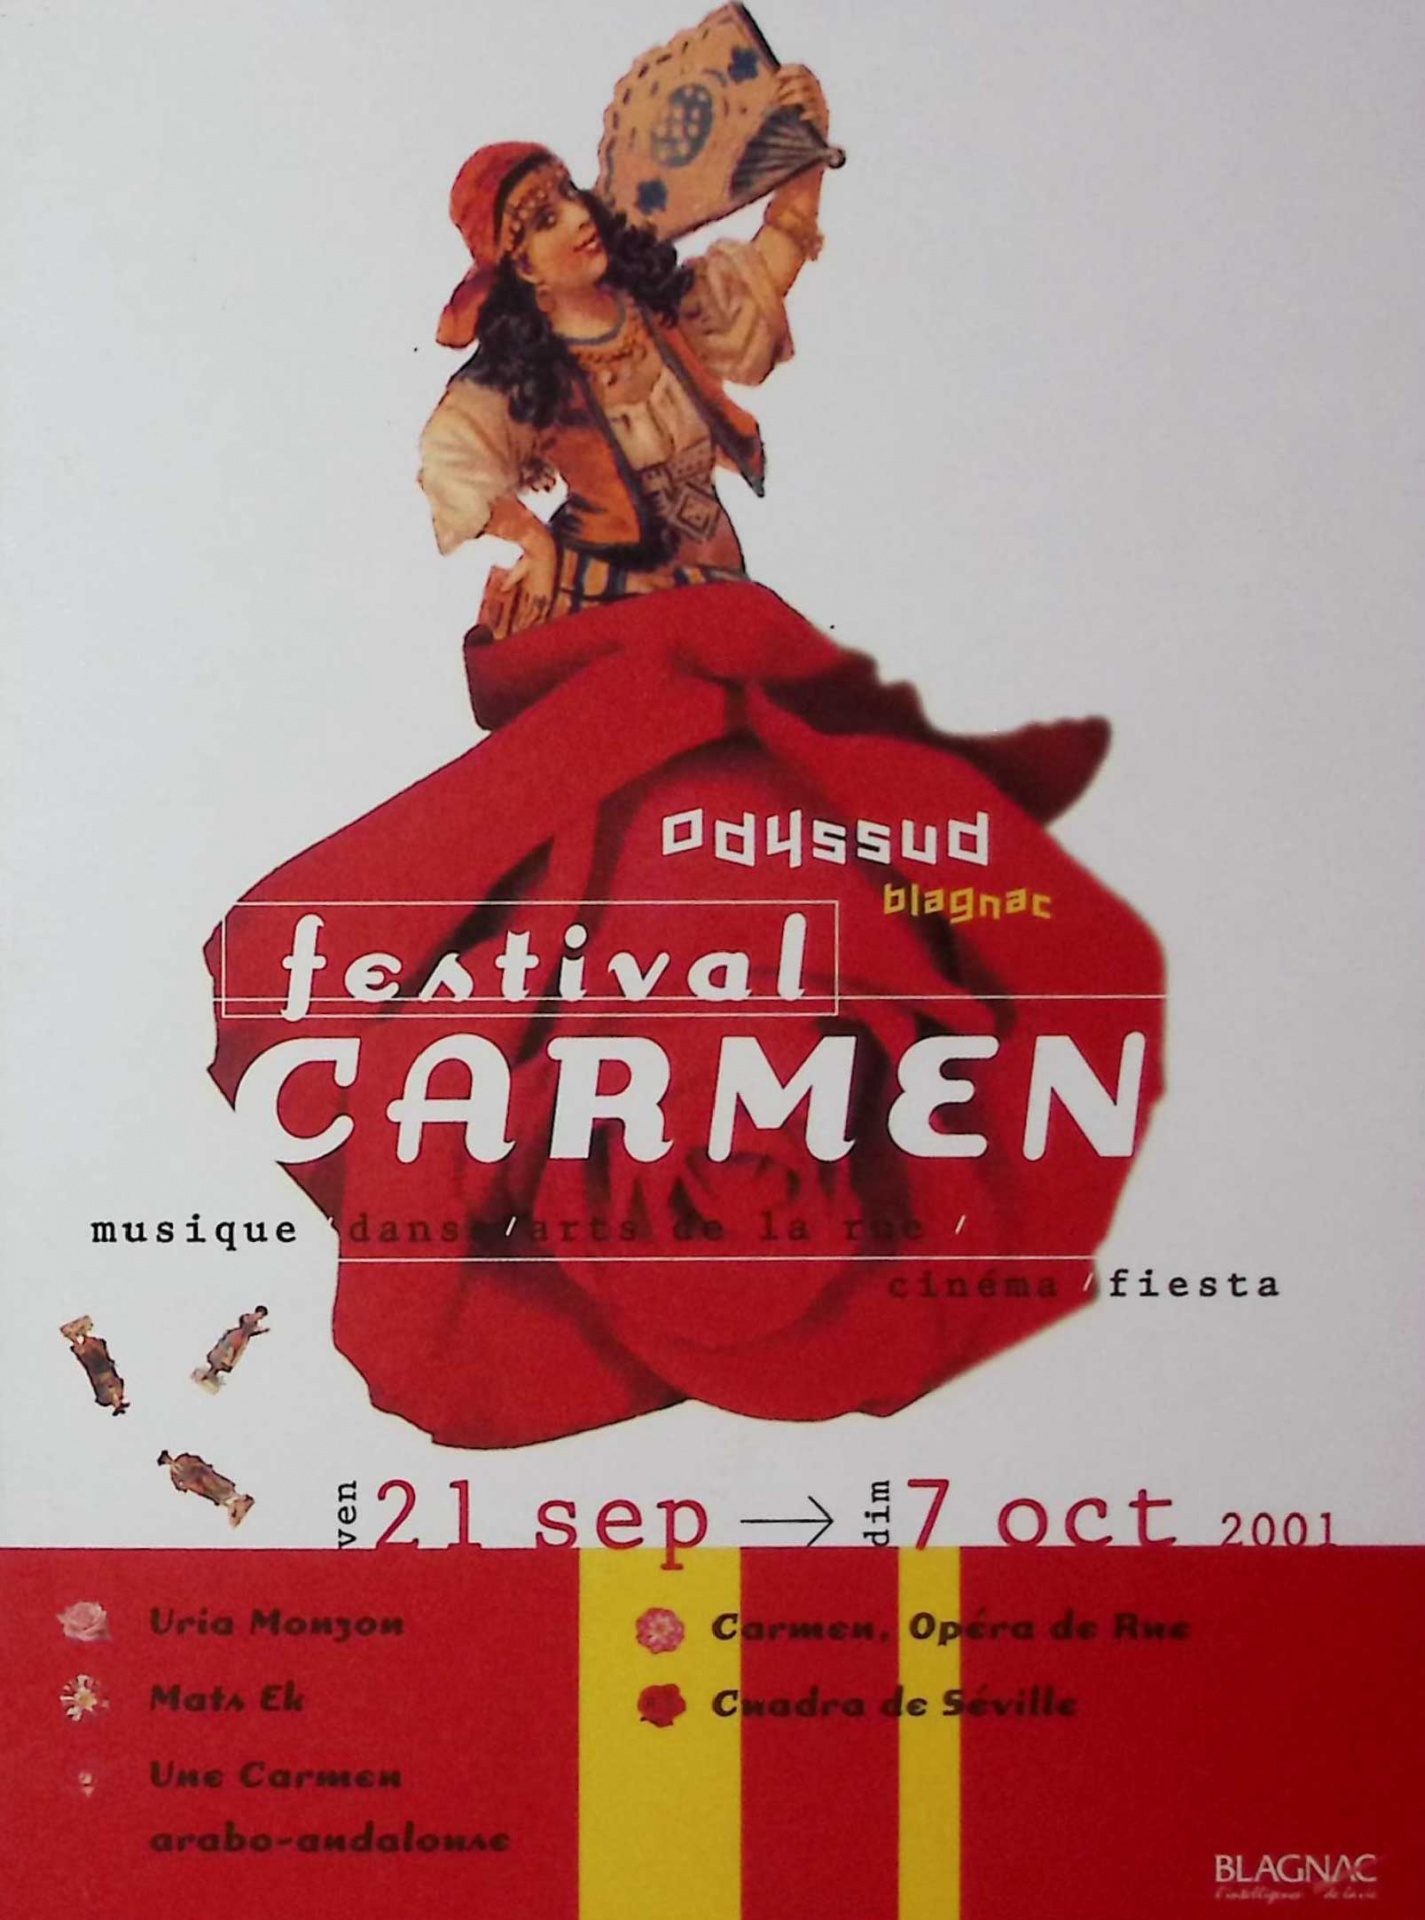 Festival Carmen. Musique, danse, arts de la rue, cinema, fiesta